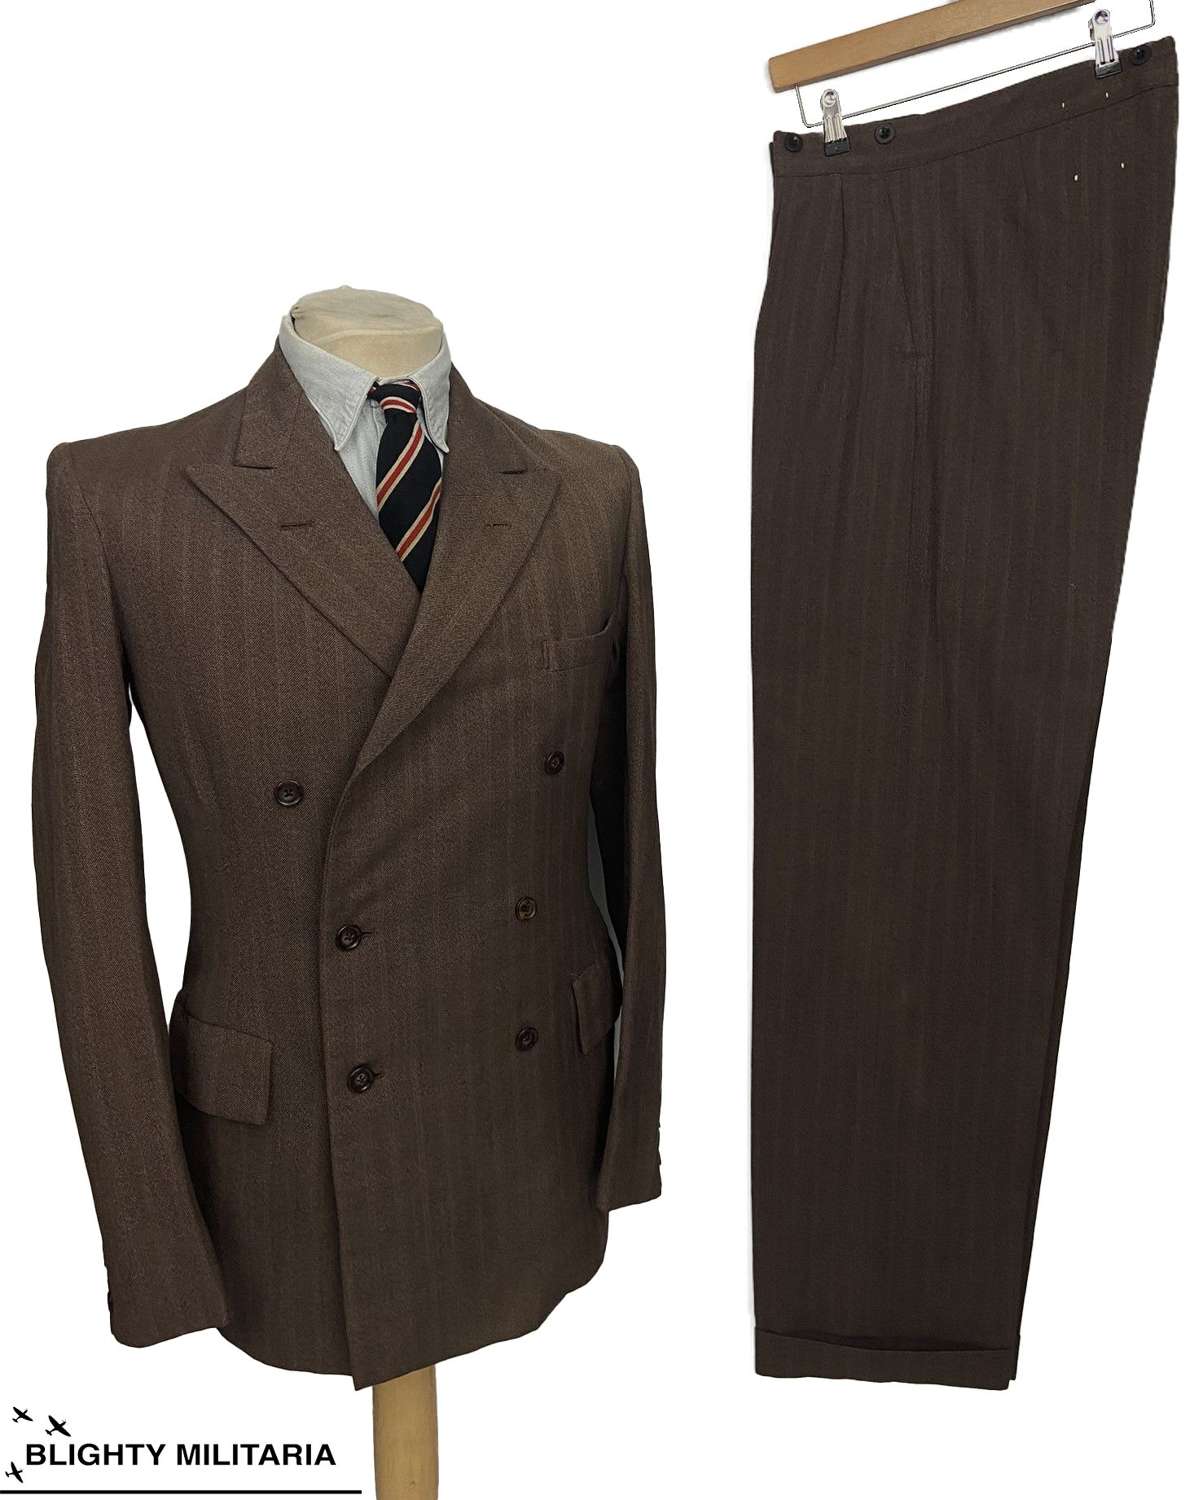 Original 1957 Dated British Military Demobilisation Suit - Size 38L